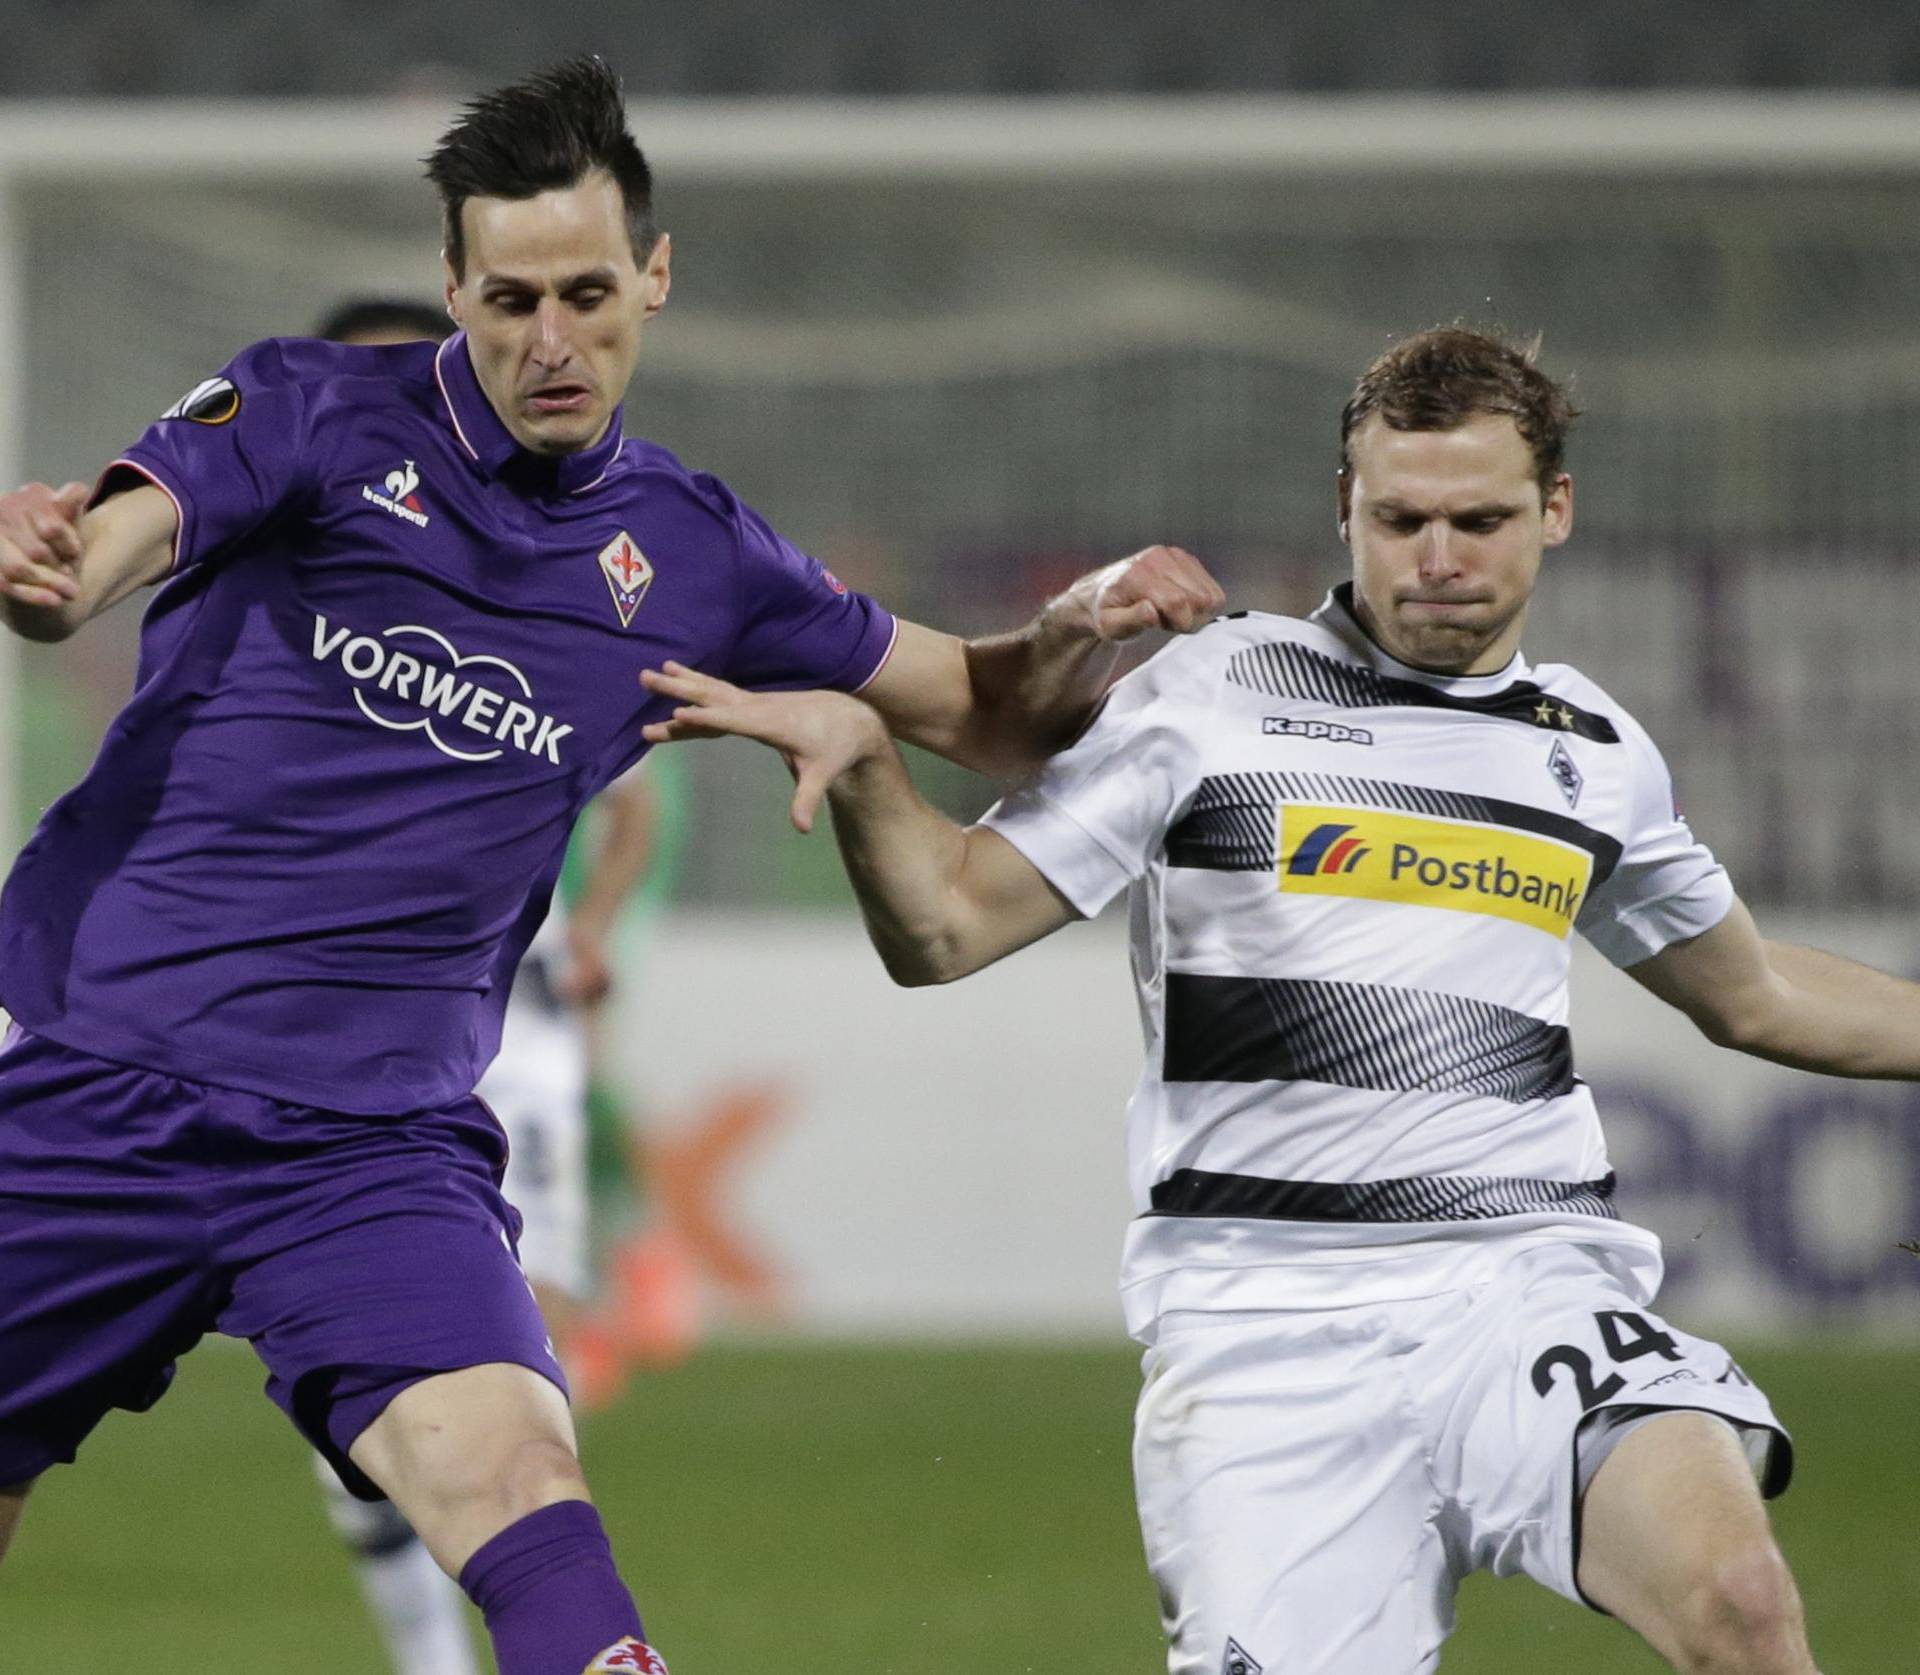 Borussia Monchengladbach's Tony Jantschke in action with Fiorentina's Nikola Kalinic